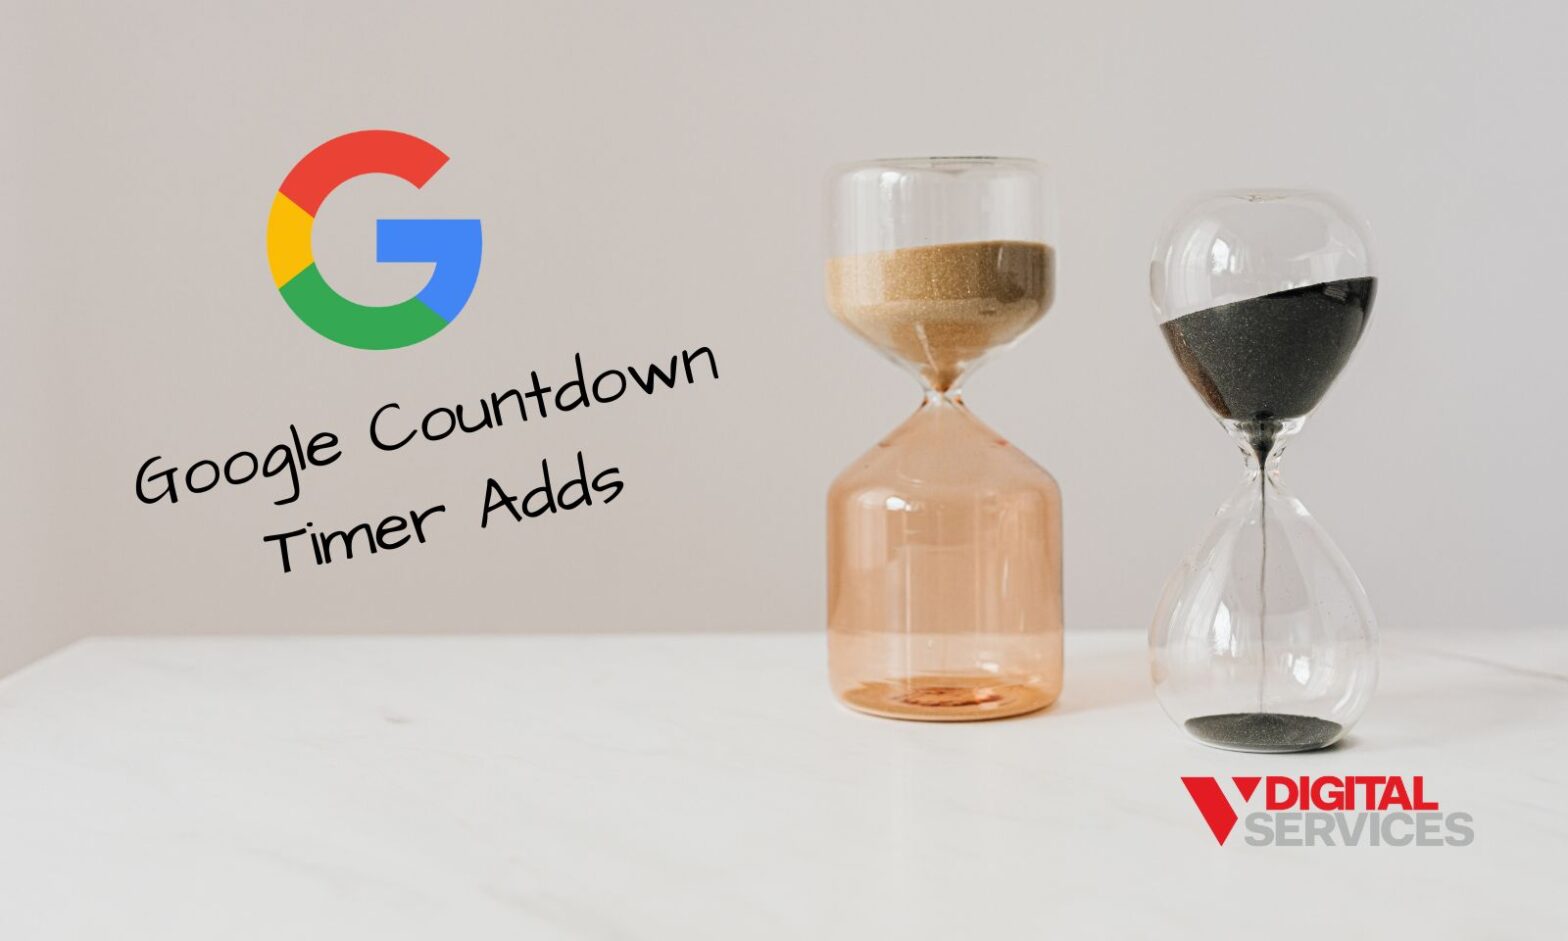 Google Countdown Timer Adds V Digital Services